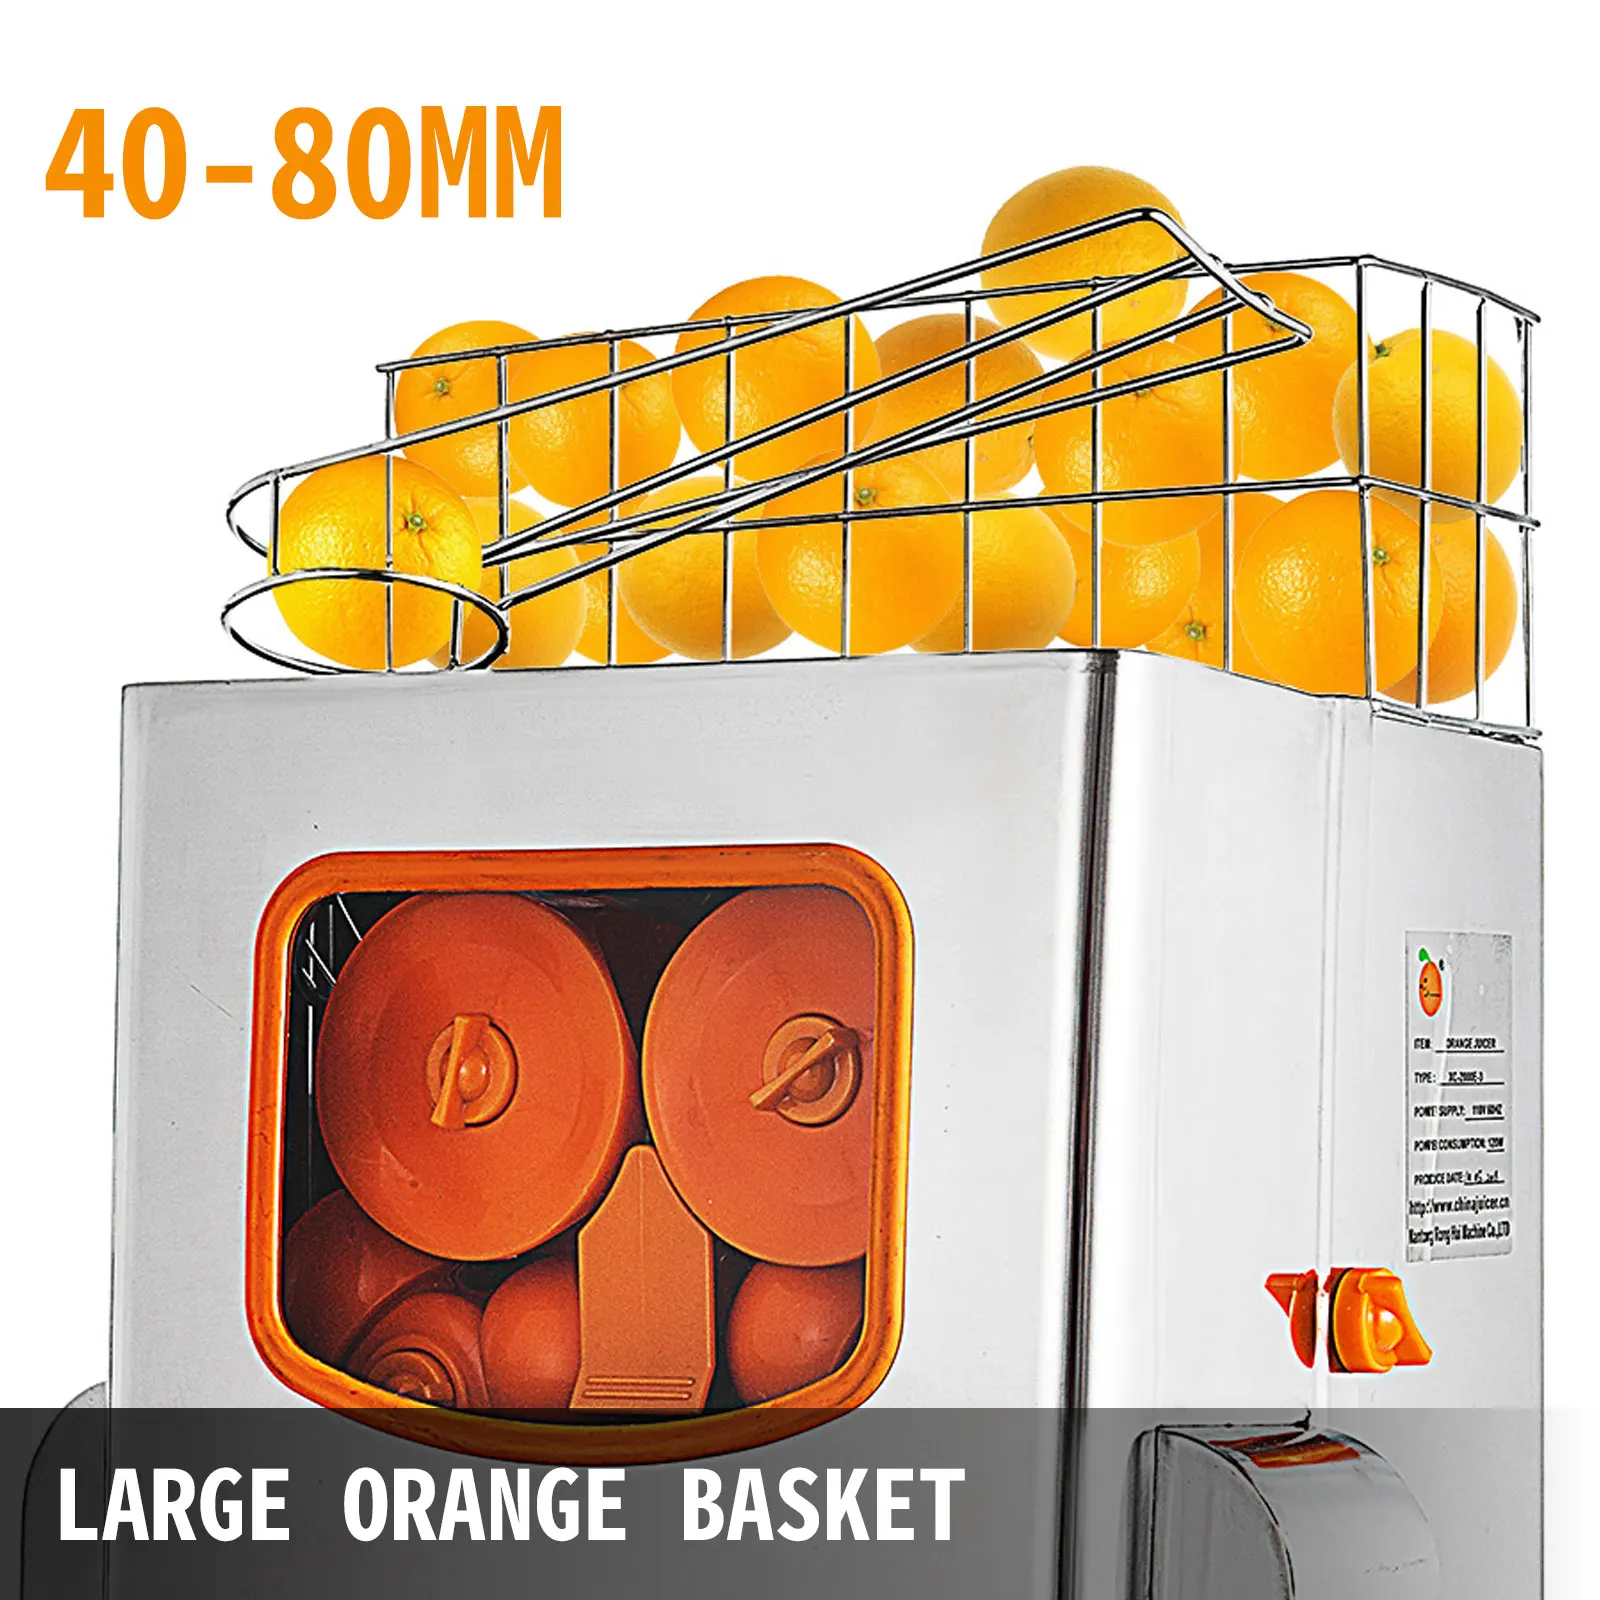 Vevor-商用ジューサーマシン、1分あたり22-30用のオレンジ絞り器、プルアウトフィルターボックス付き電気ジュース抽出器、120w